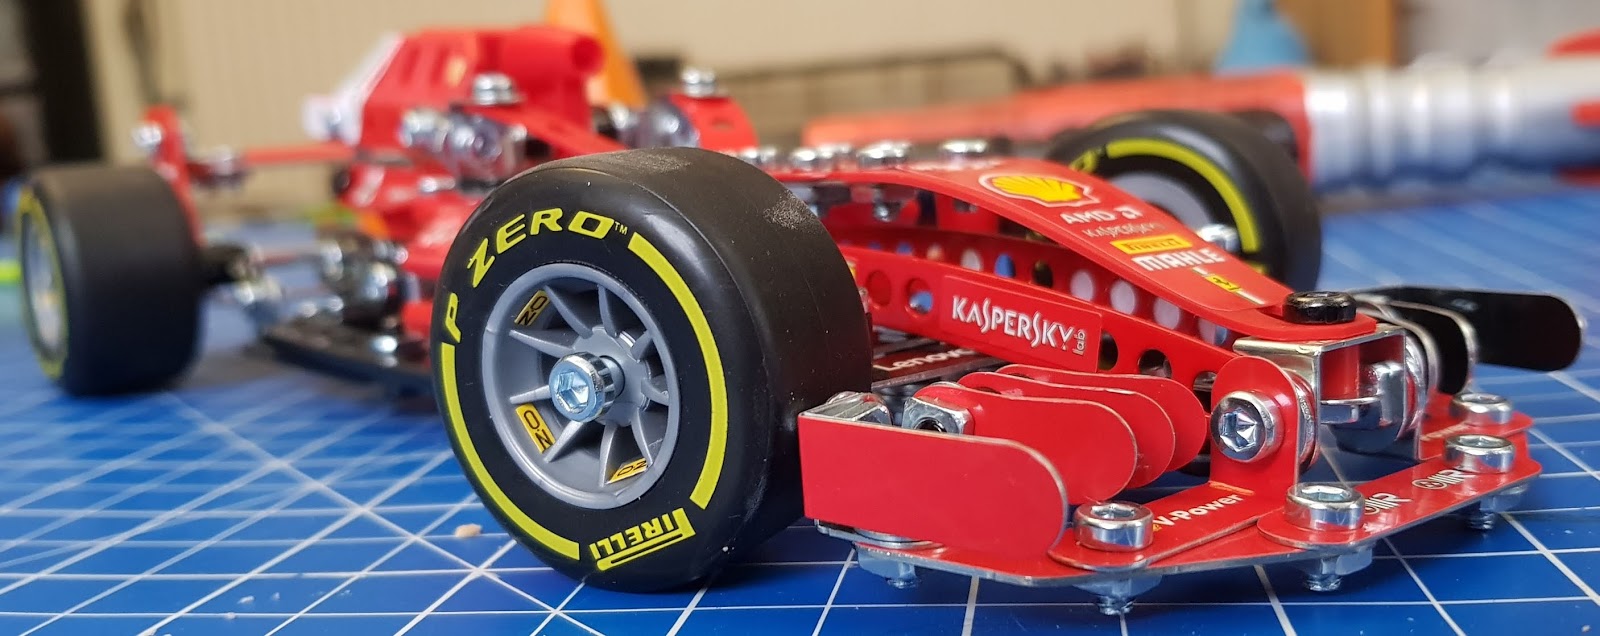 Meccano Racer Model Set Ferrari F1 Red 6044641 